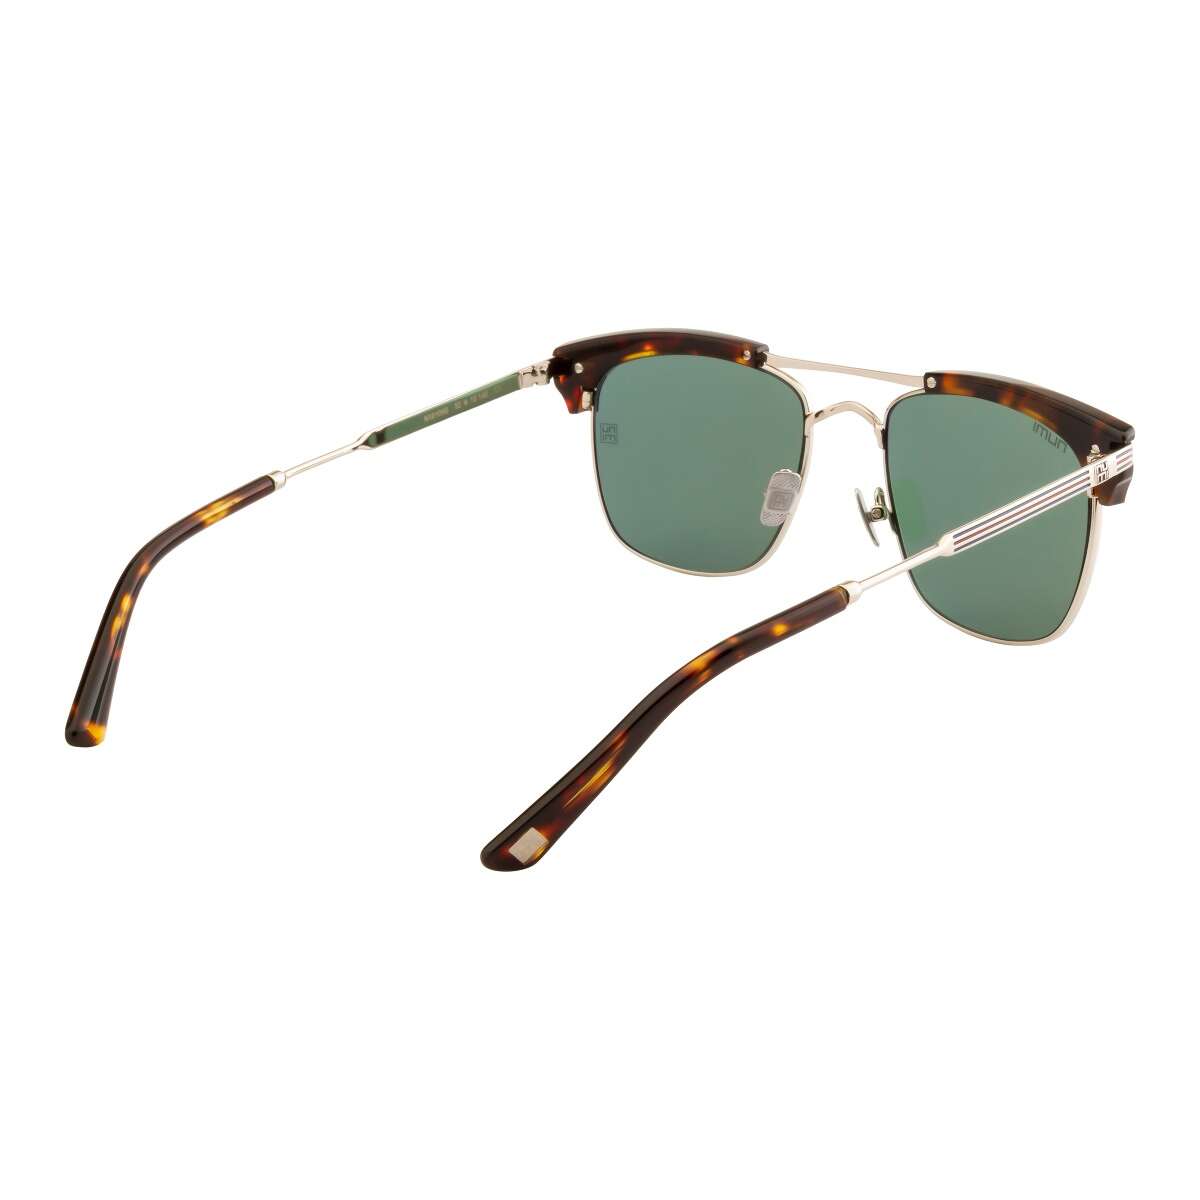 buy octa sunglasses online